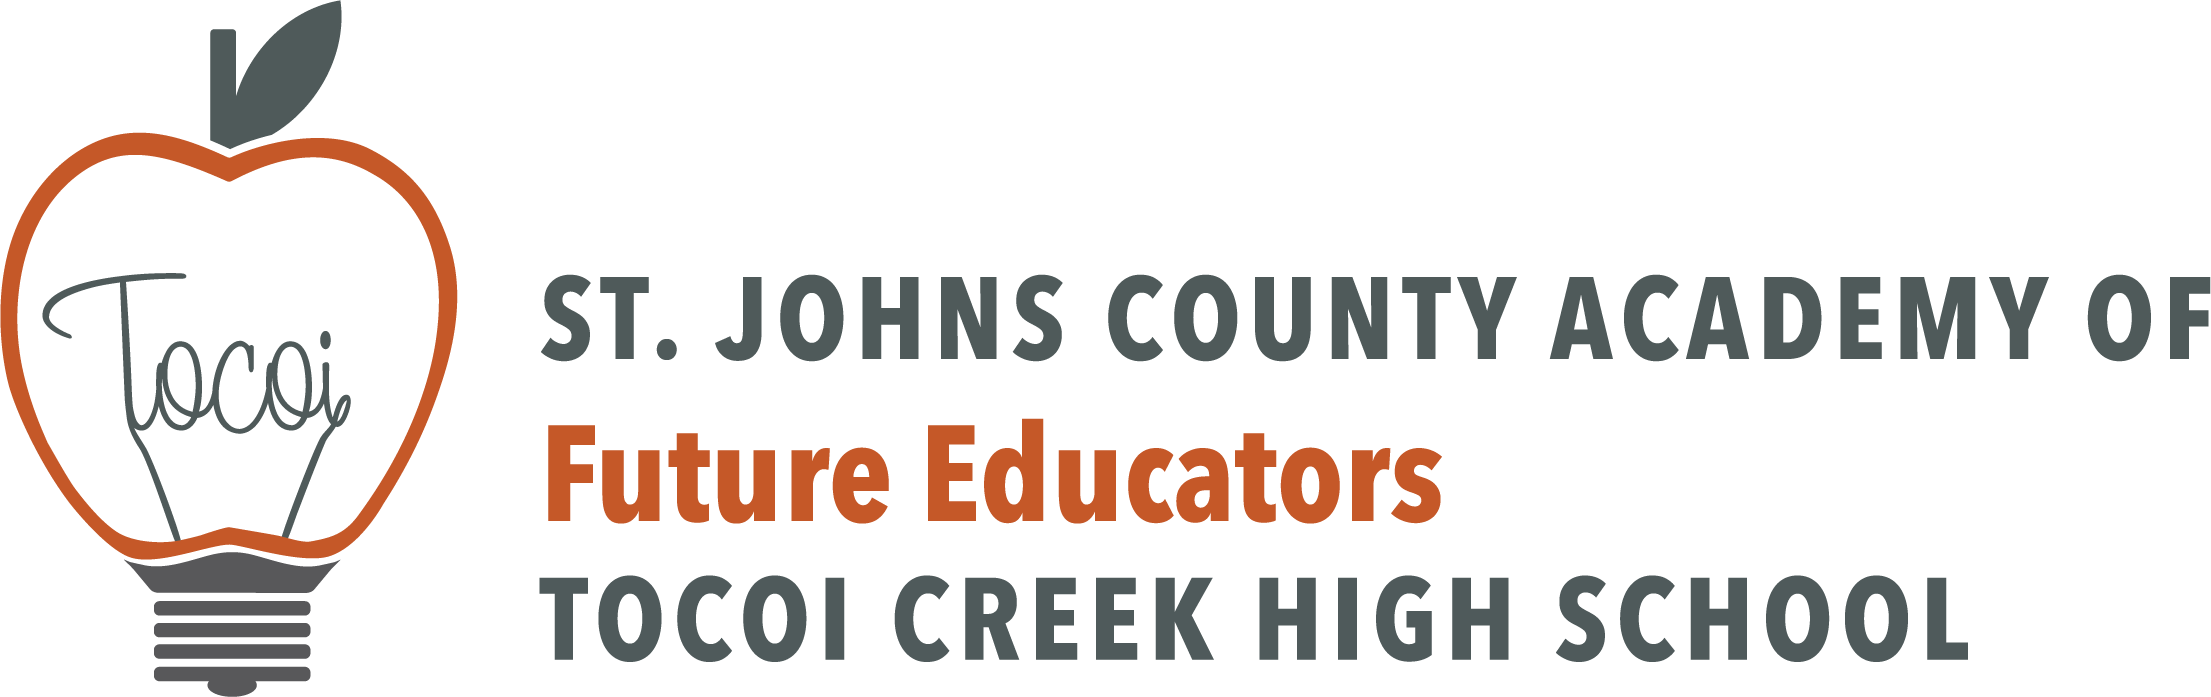 St. Johns County Academy of Future Educators - Tocoi Creek High School